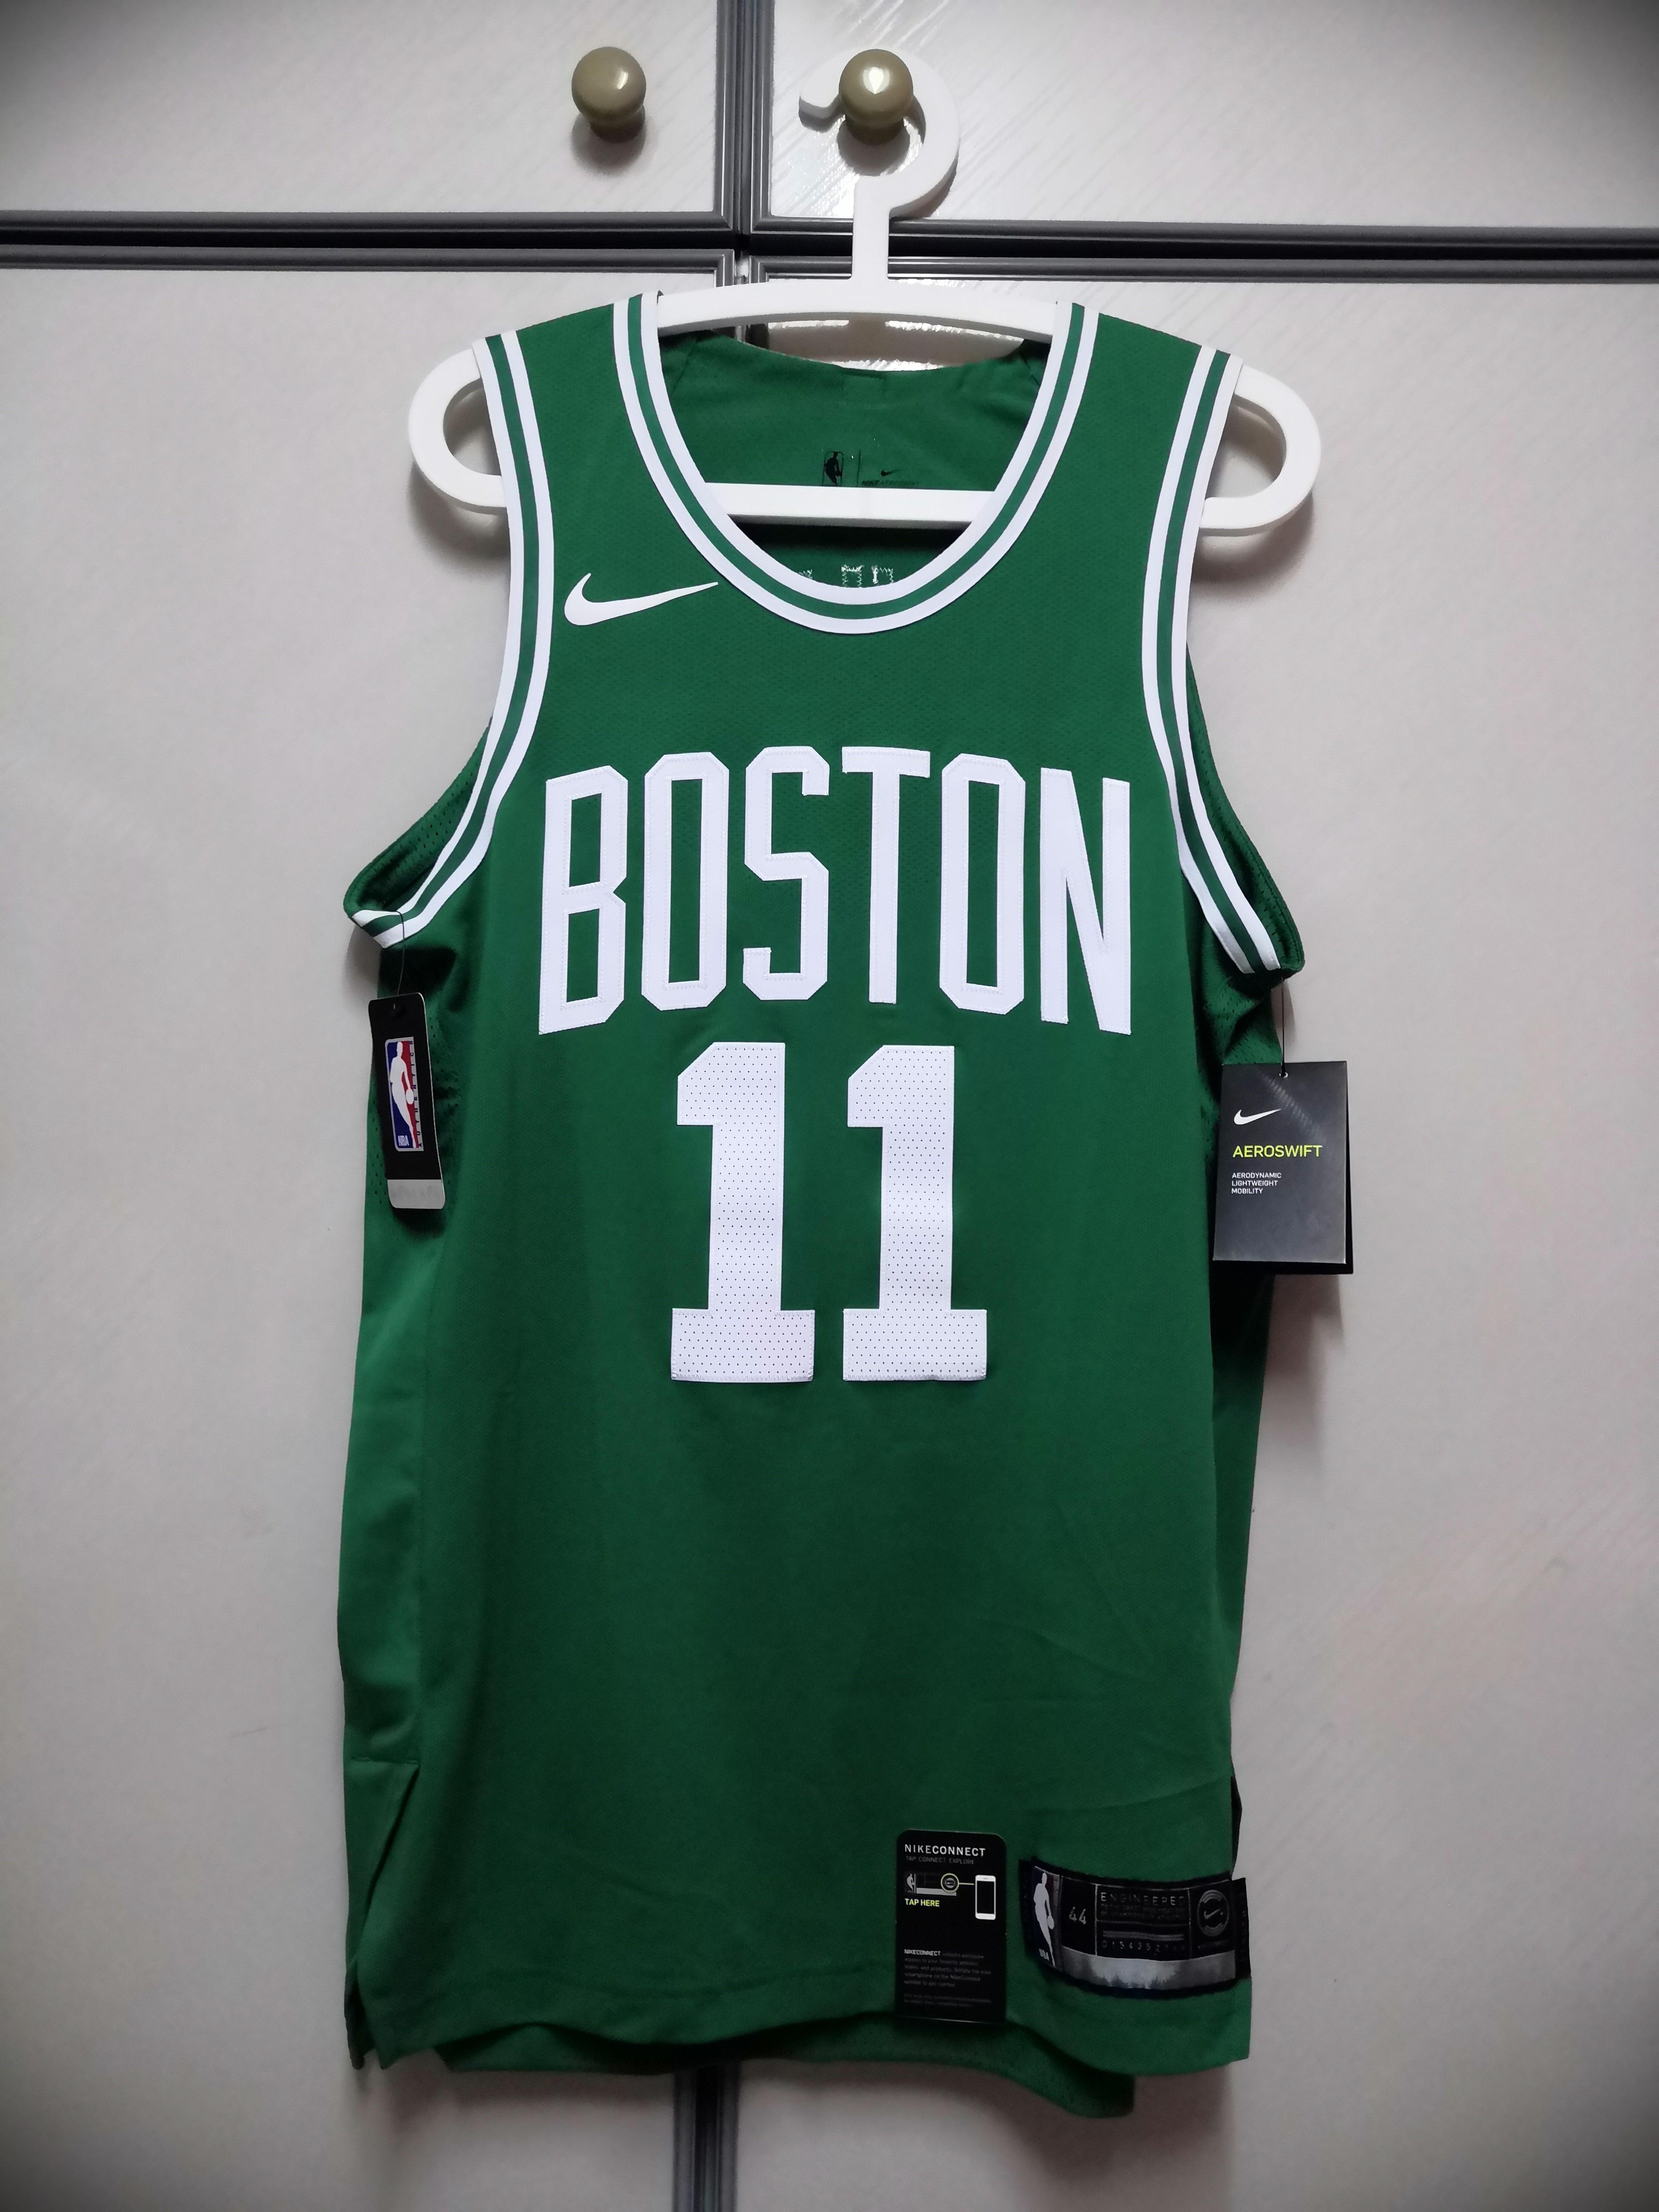 Nike NBA Kyrie Irving #11 Boston Celtics Basketball Jersey